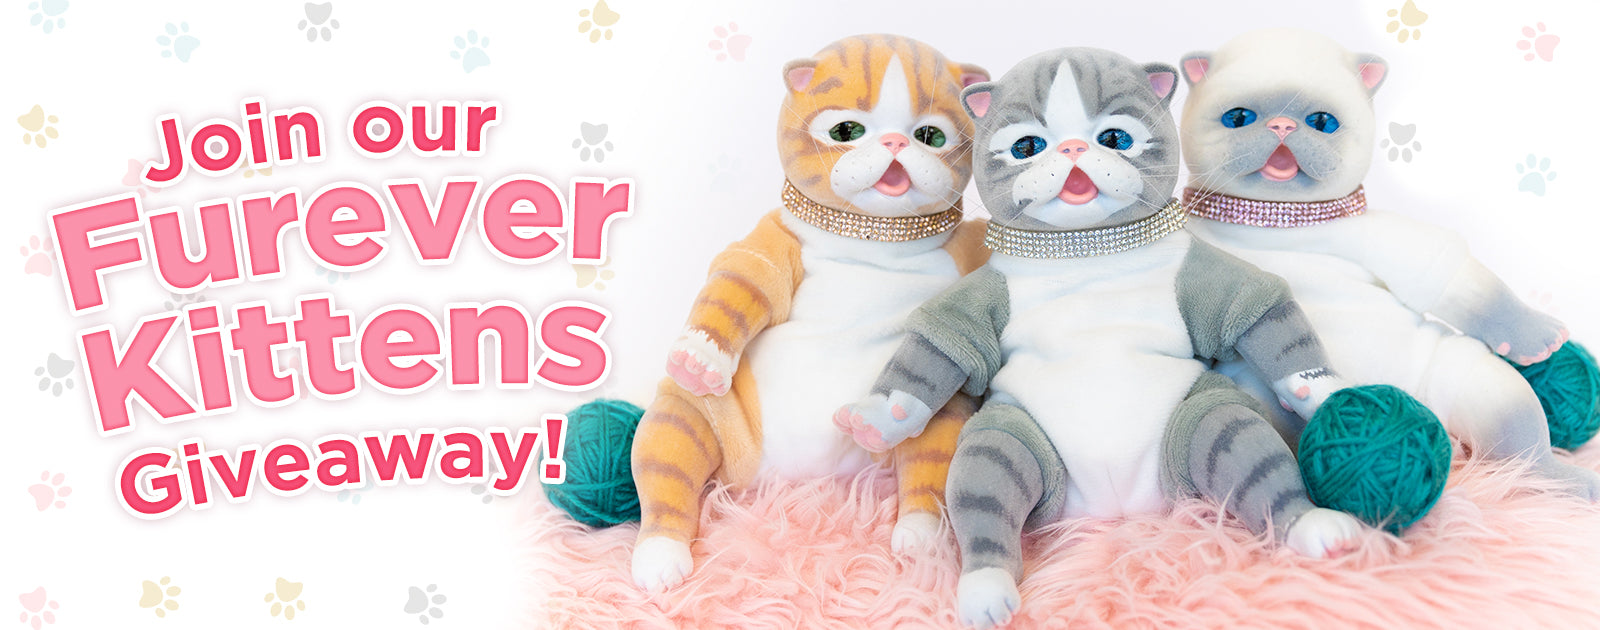 Furever Babies Kittens-Giveaways.jpg__PID:b85a0a4f-db6a-4ab2-9ead-980f1bd67a20